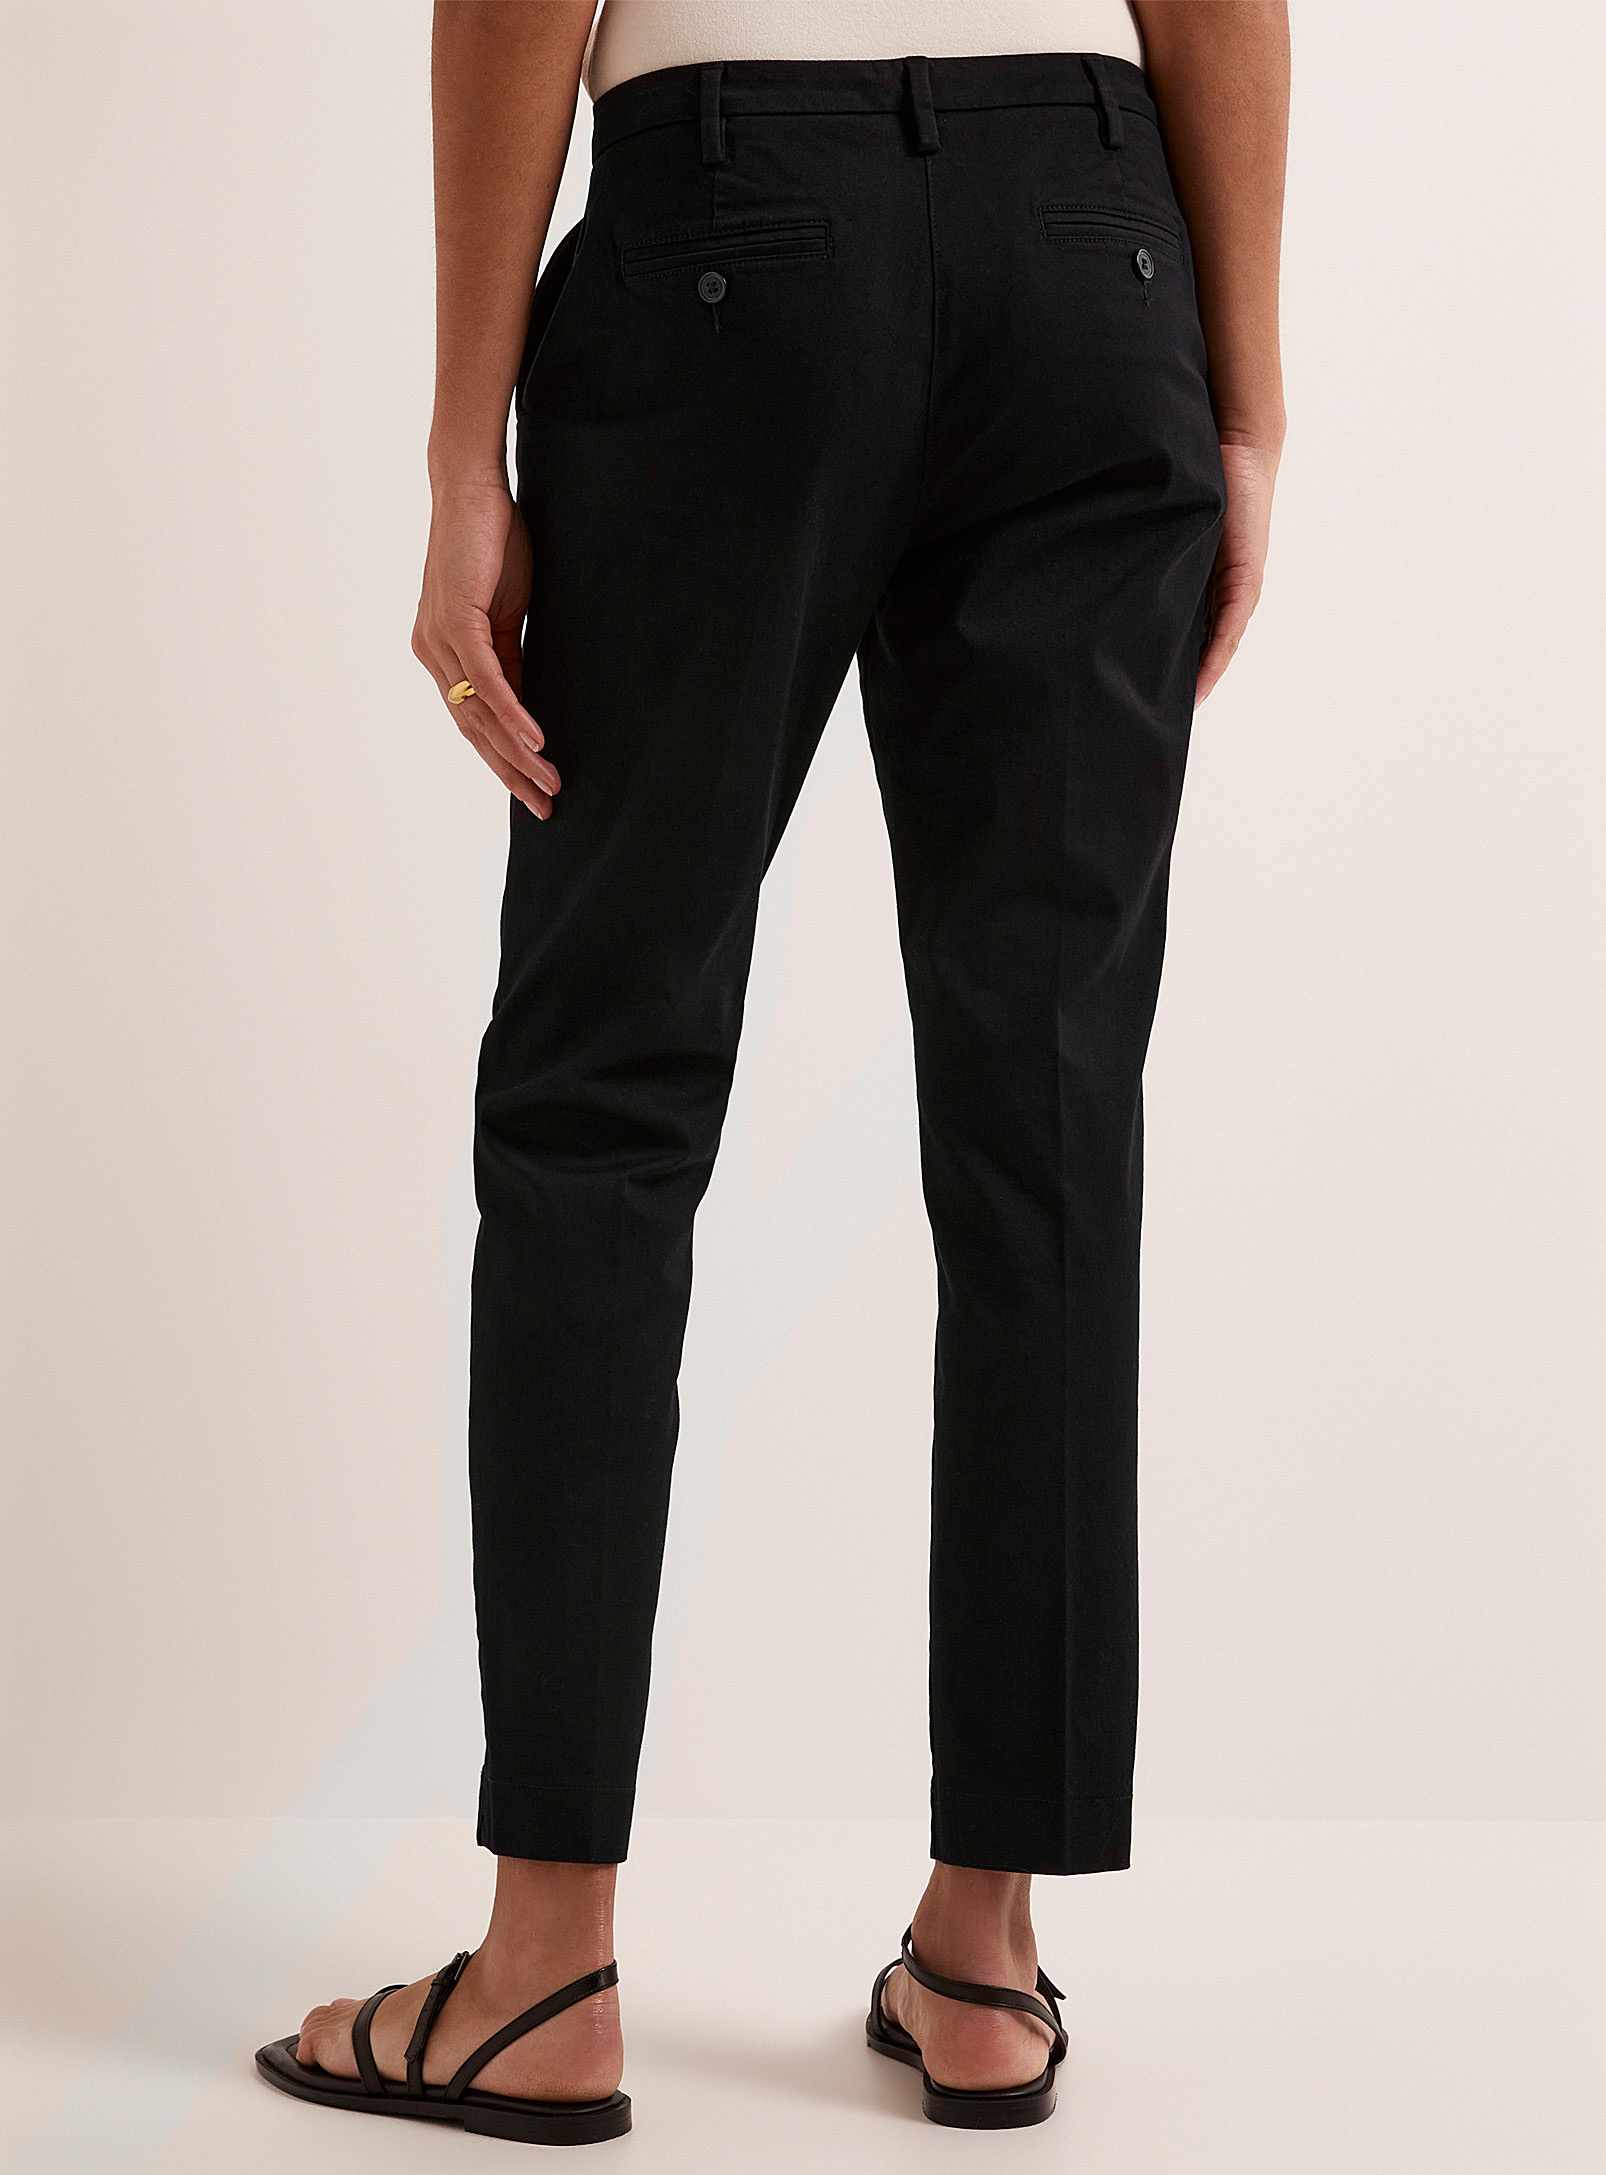 Sisley - Le pantalon chino extensible coupe étroite